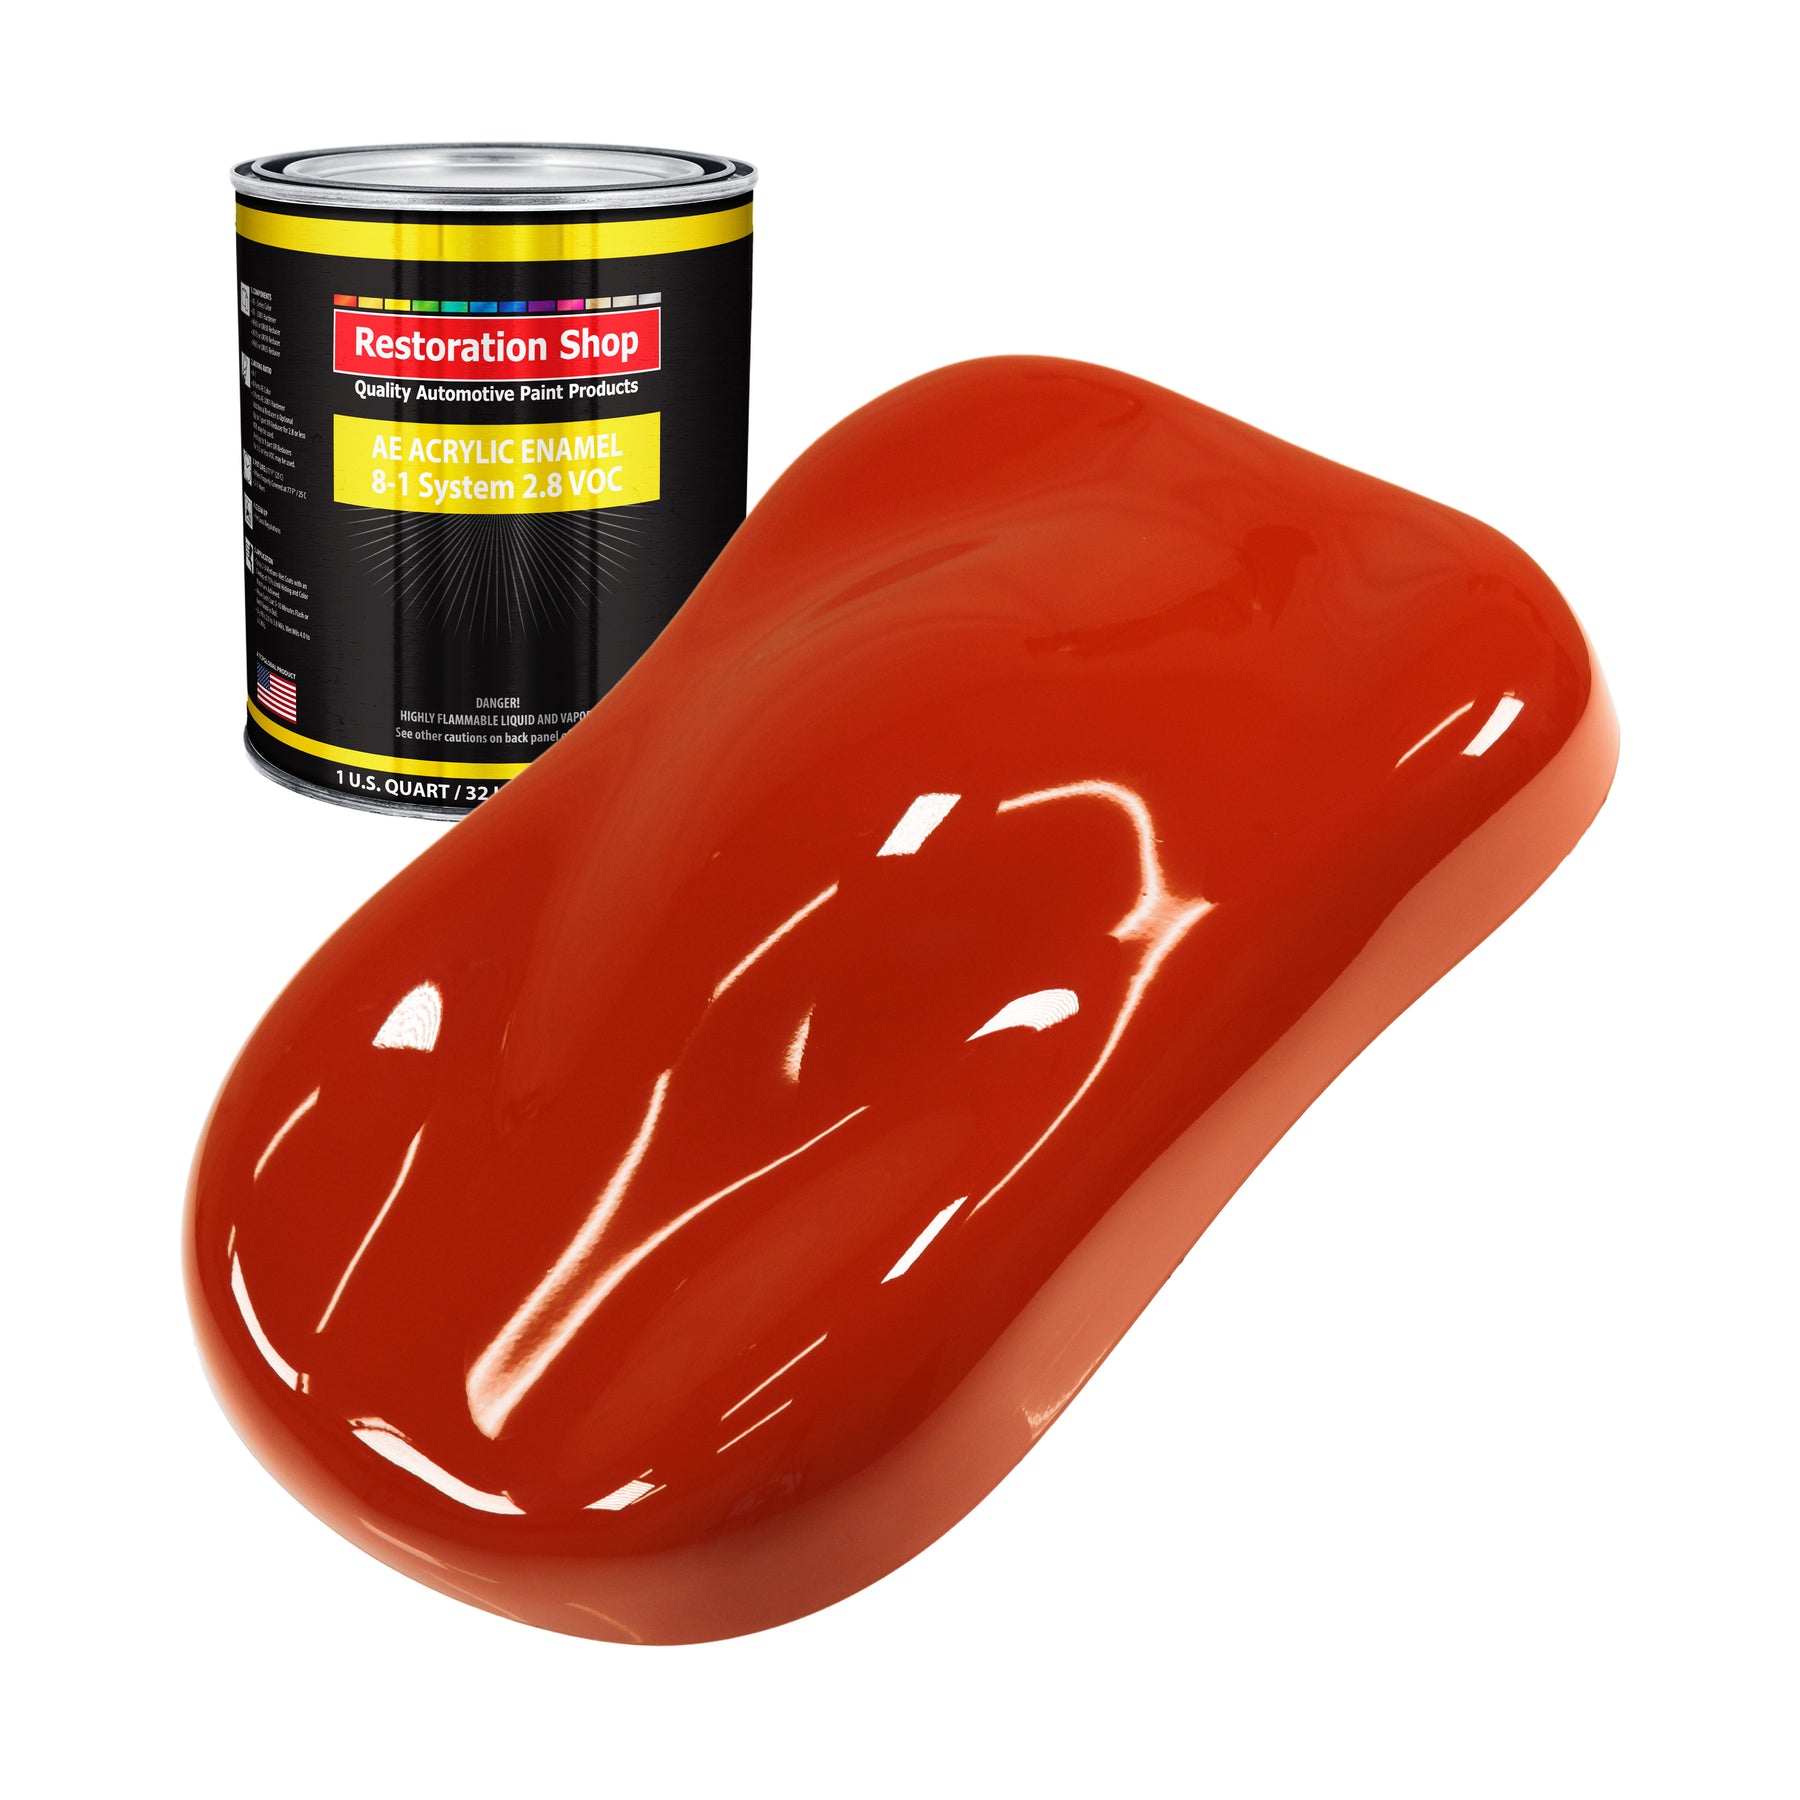  Restoration Shop - Speed Orange Acrylic Enamel Auto Paint -  Complete Gallon Paint Kit - Professional Single Stage High Gloss  Automotive, Car, Truck, Equipment Coating, 8:1 Mix Ratio, 2.8 VOC :  Automotive